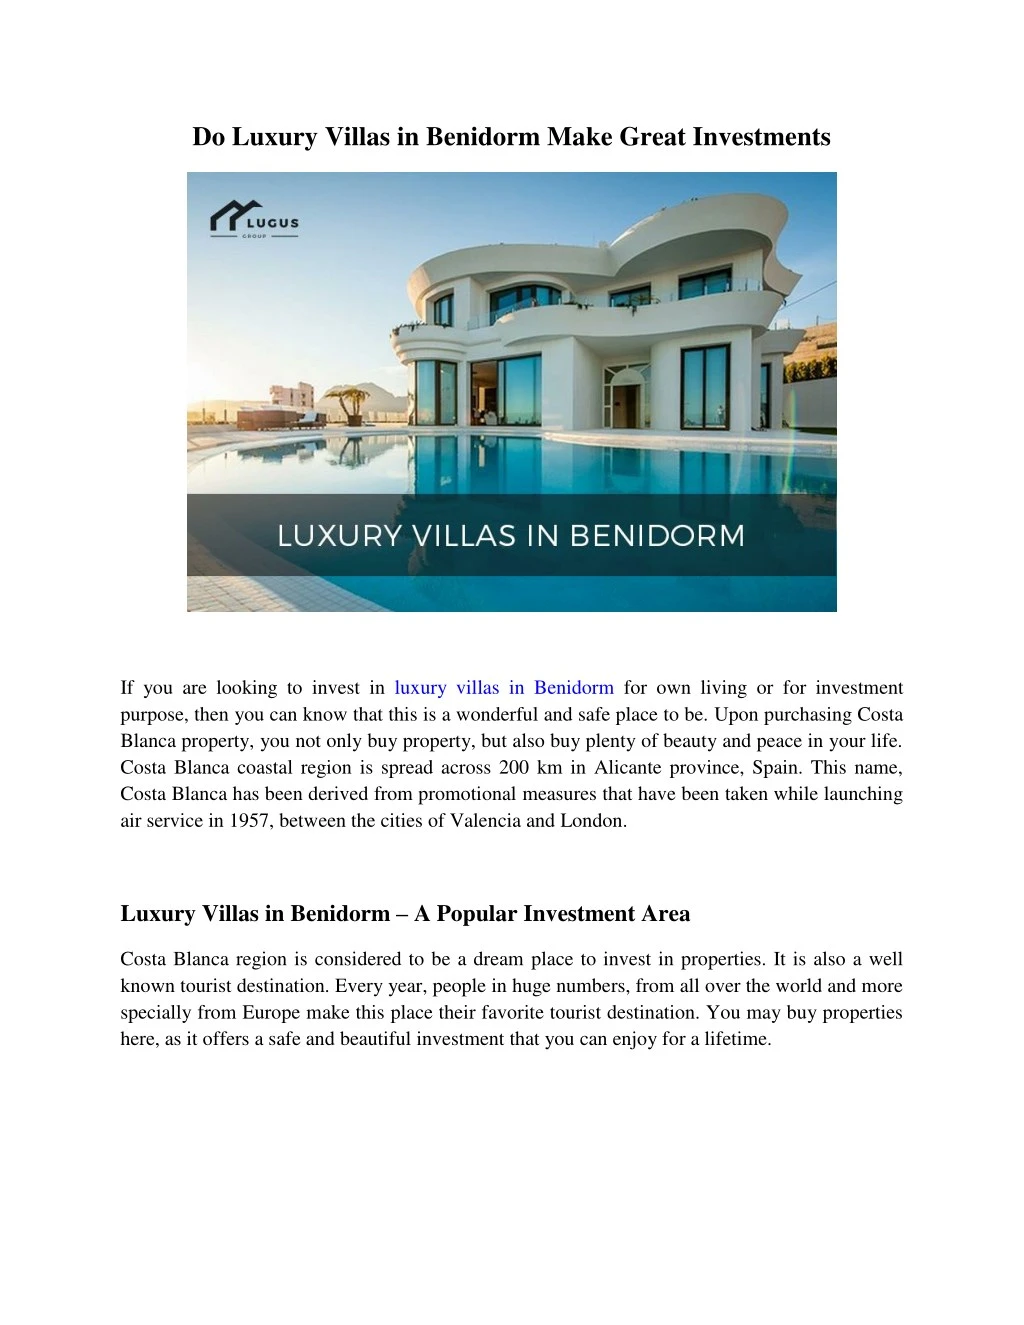 do luxury villas in benidorm make great